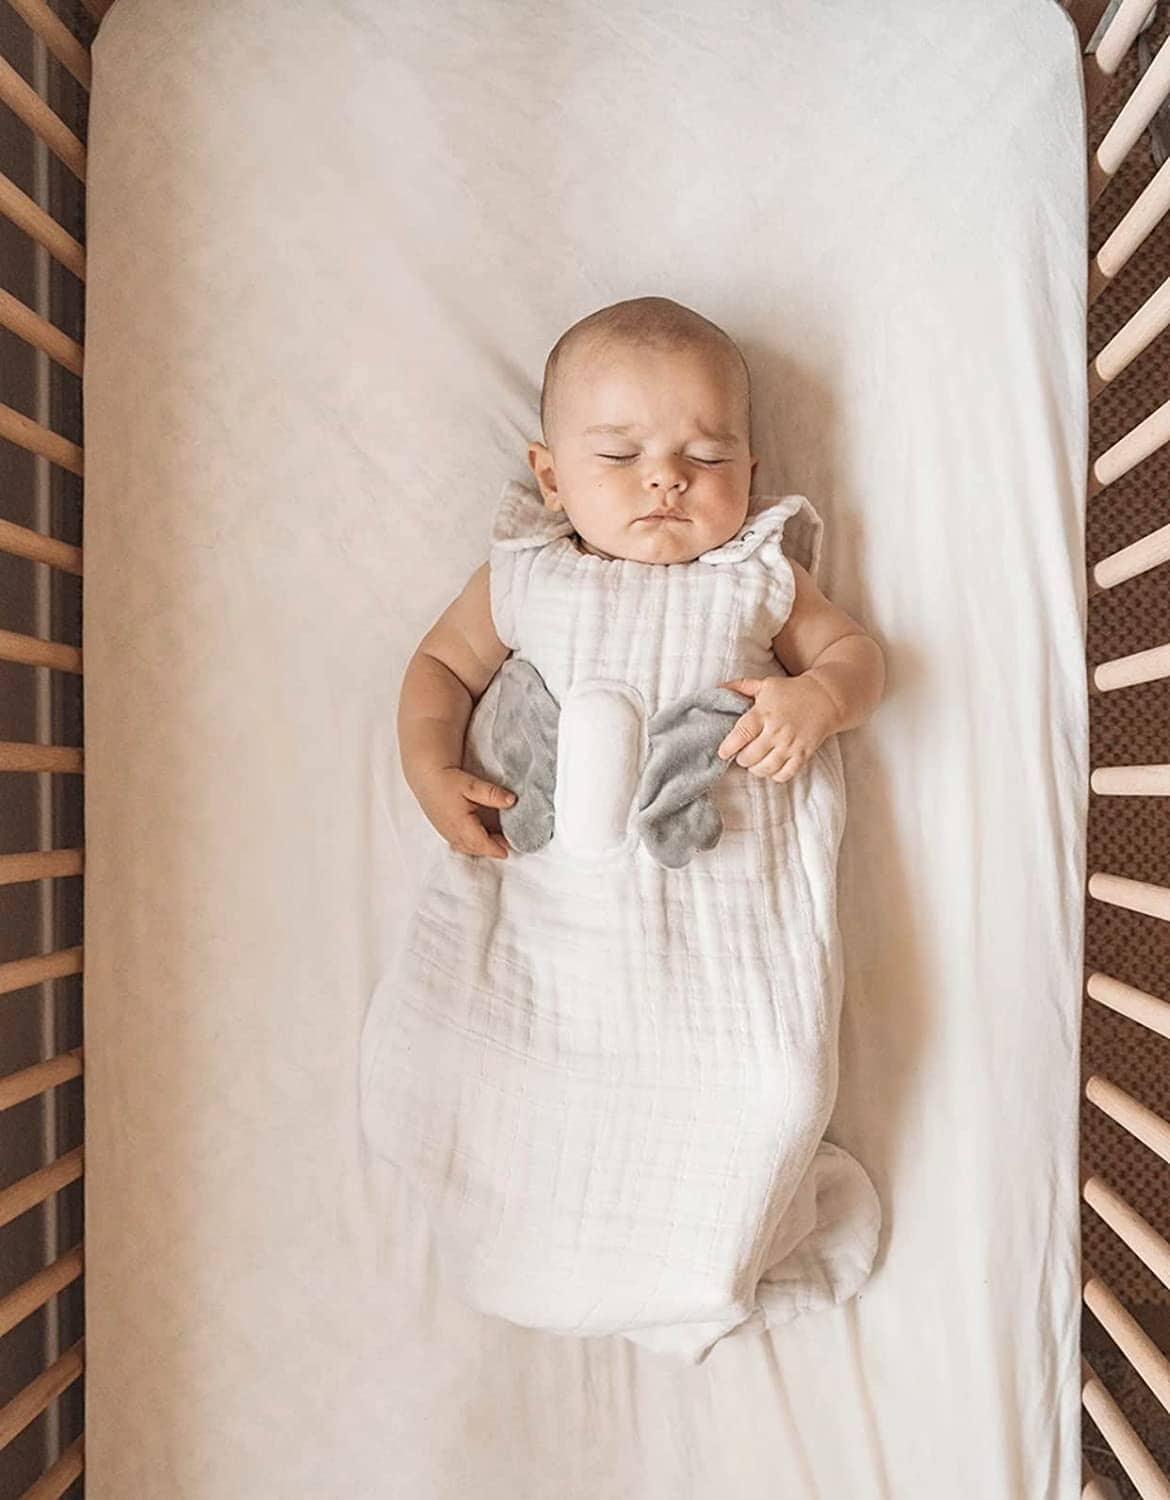 A baby sleeping in his crib wearing a Snuggy Buddy sleep sack.